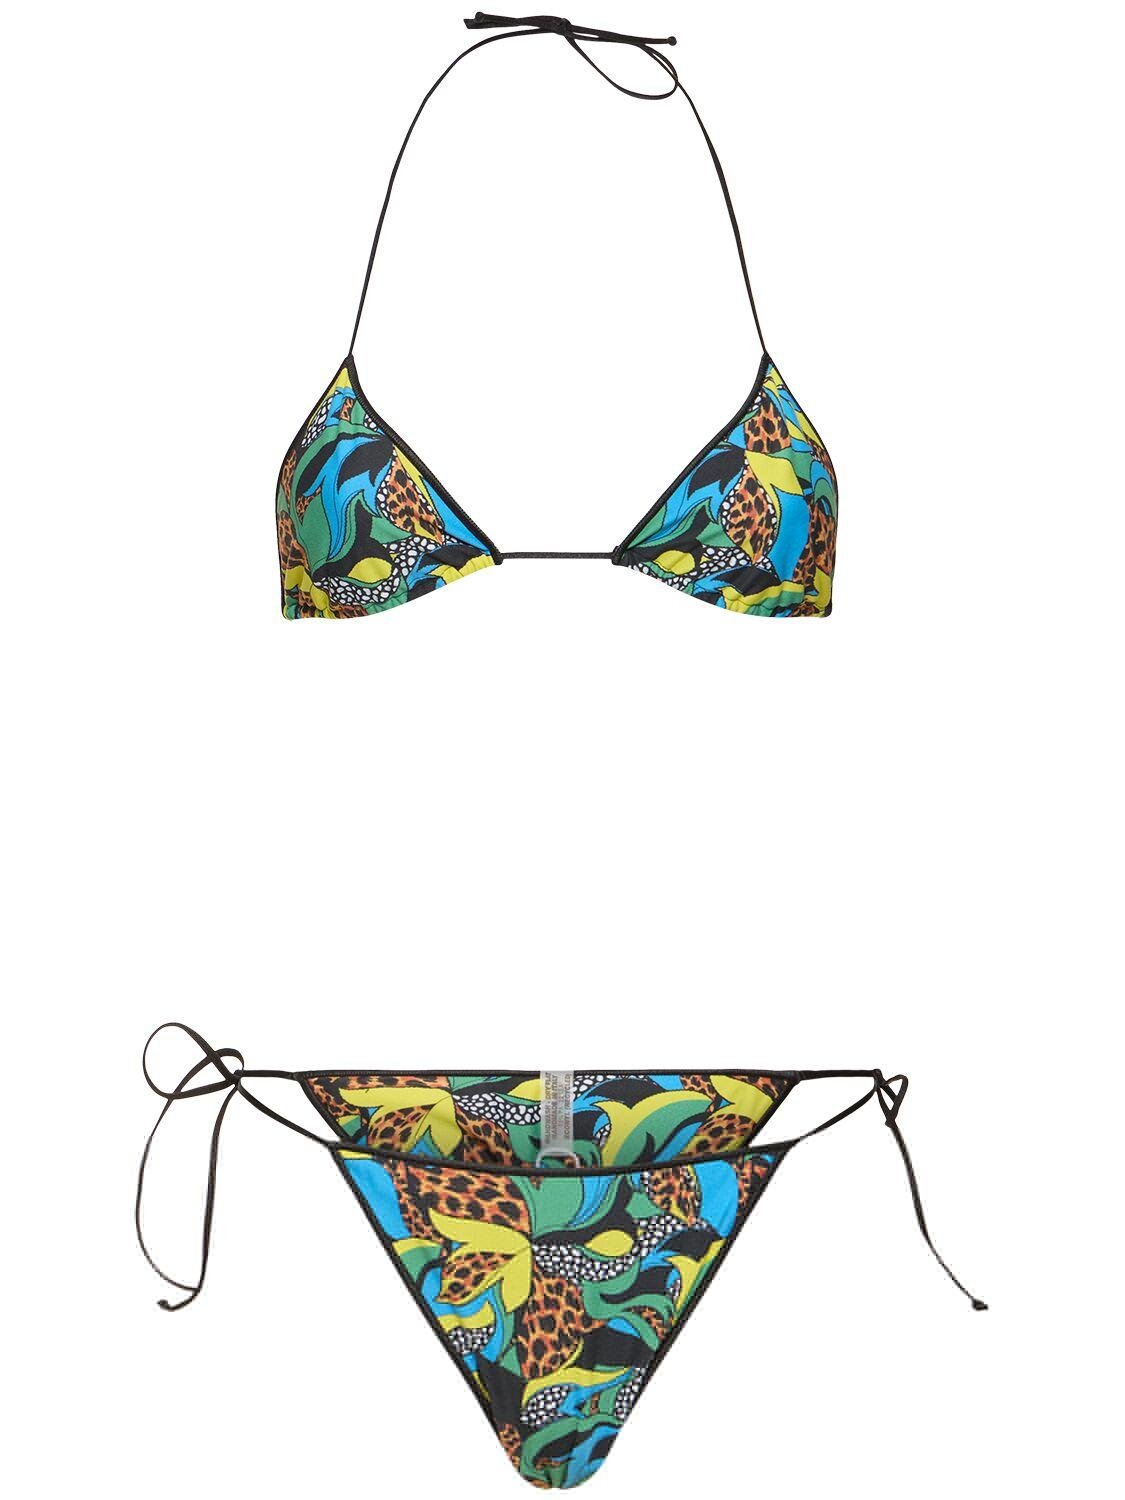 Sam Printed Triangle Bikini Set by REINA OLGA